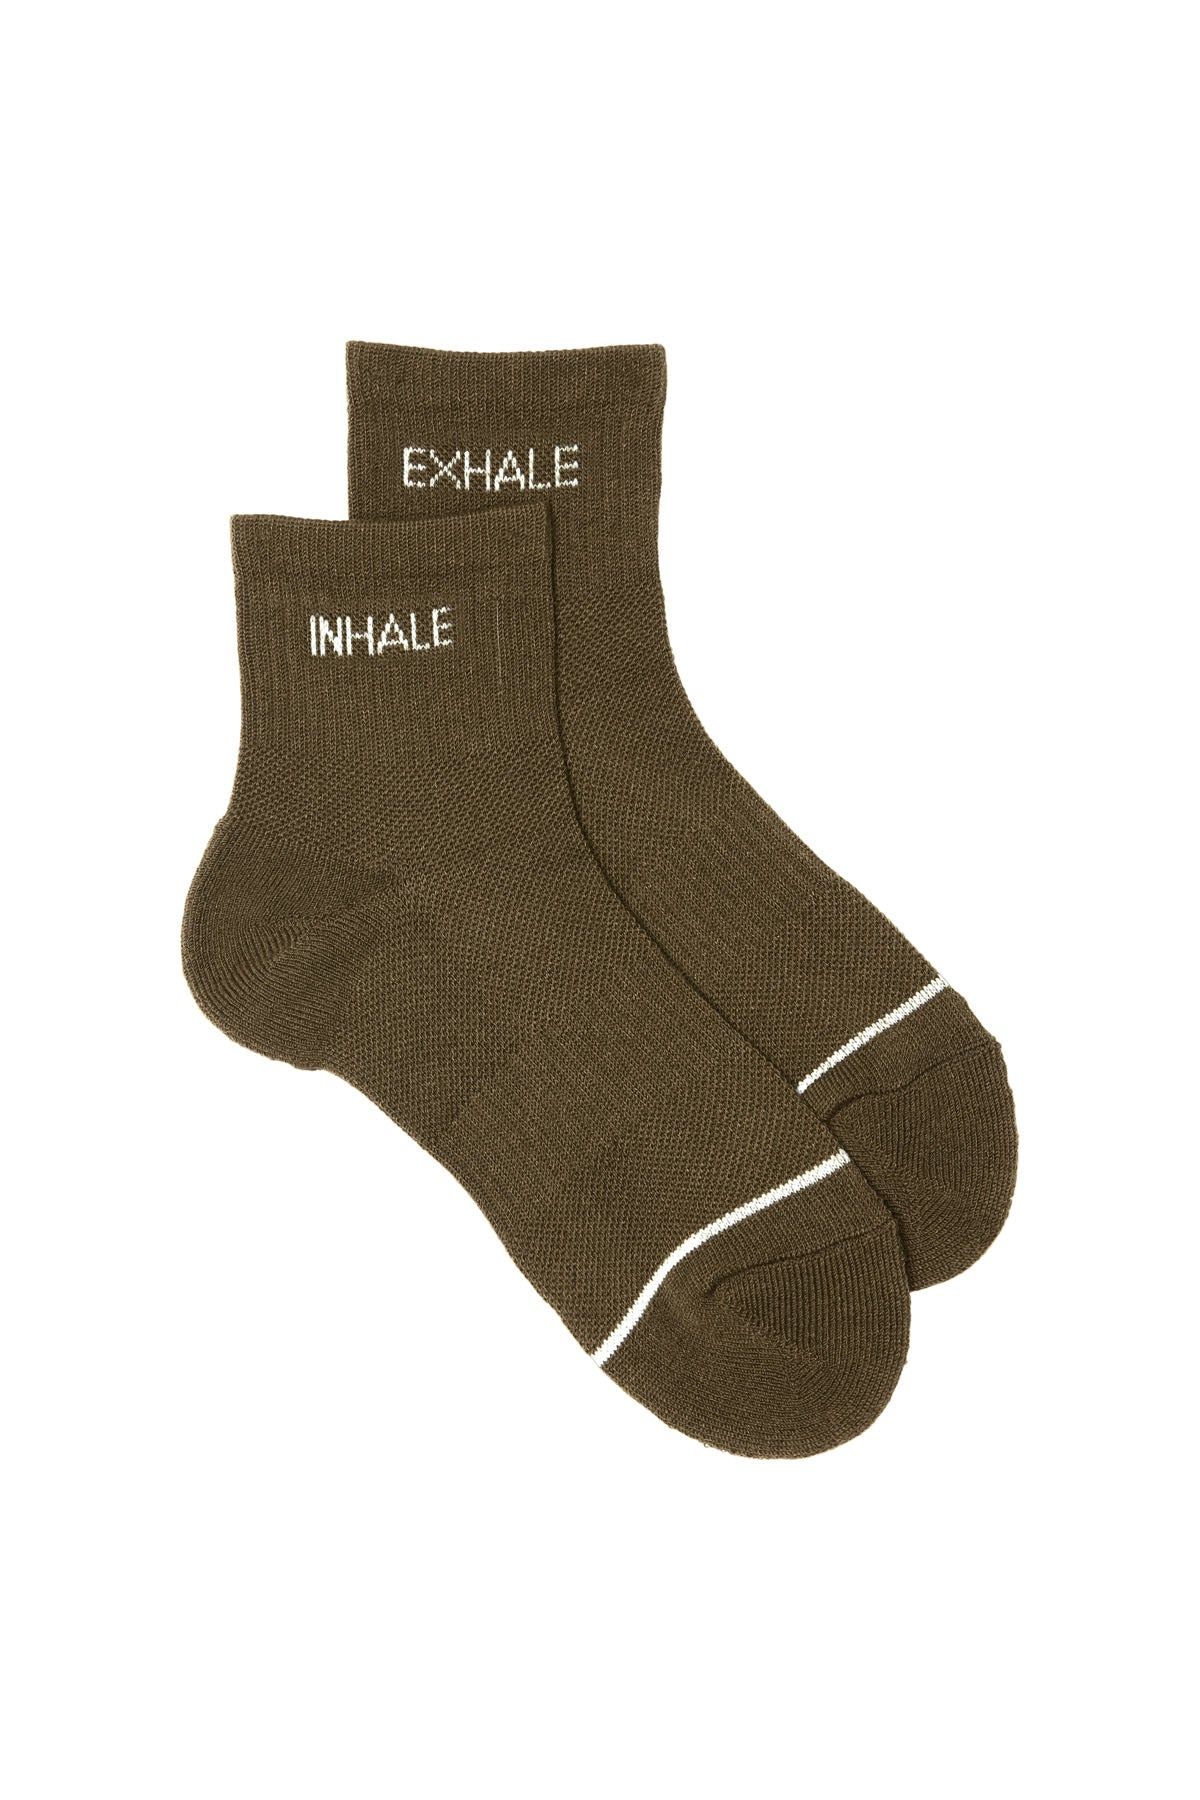 Dark Olive Inhale Exhale Quarter Crew Sock | Girlfriend Collective